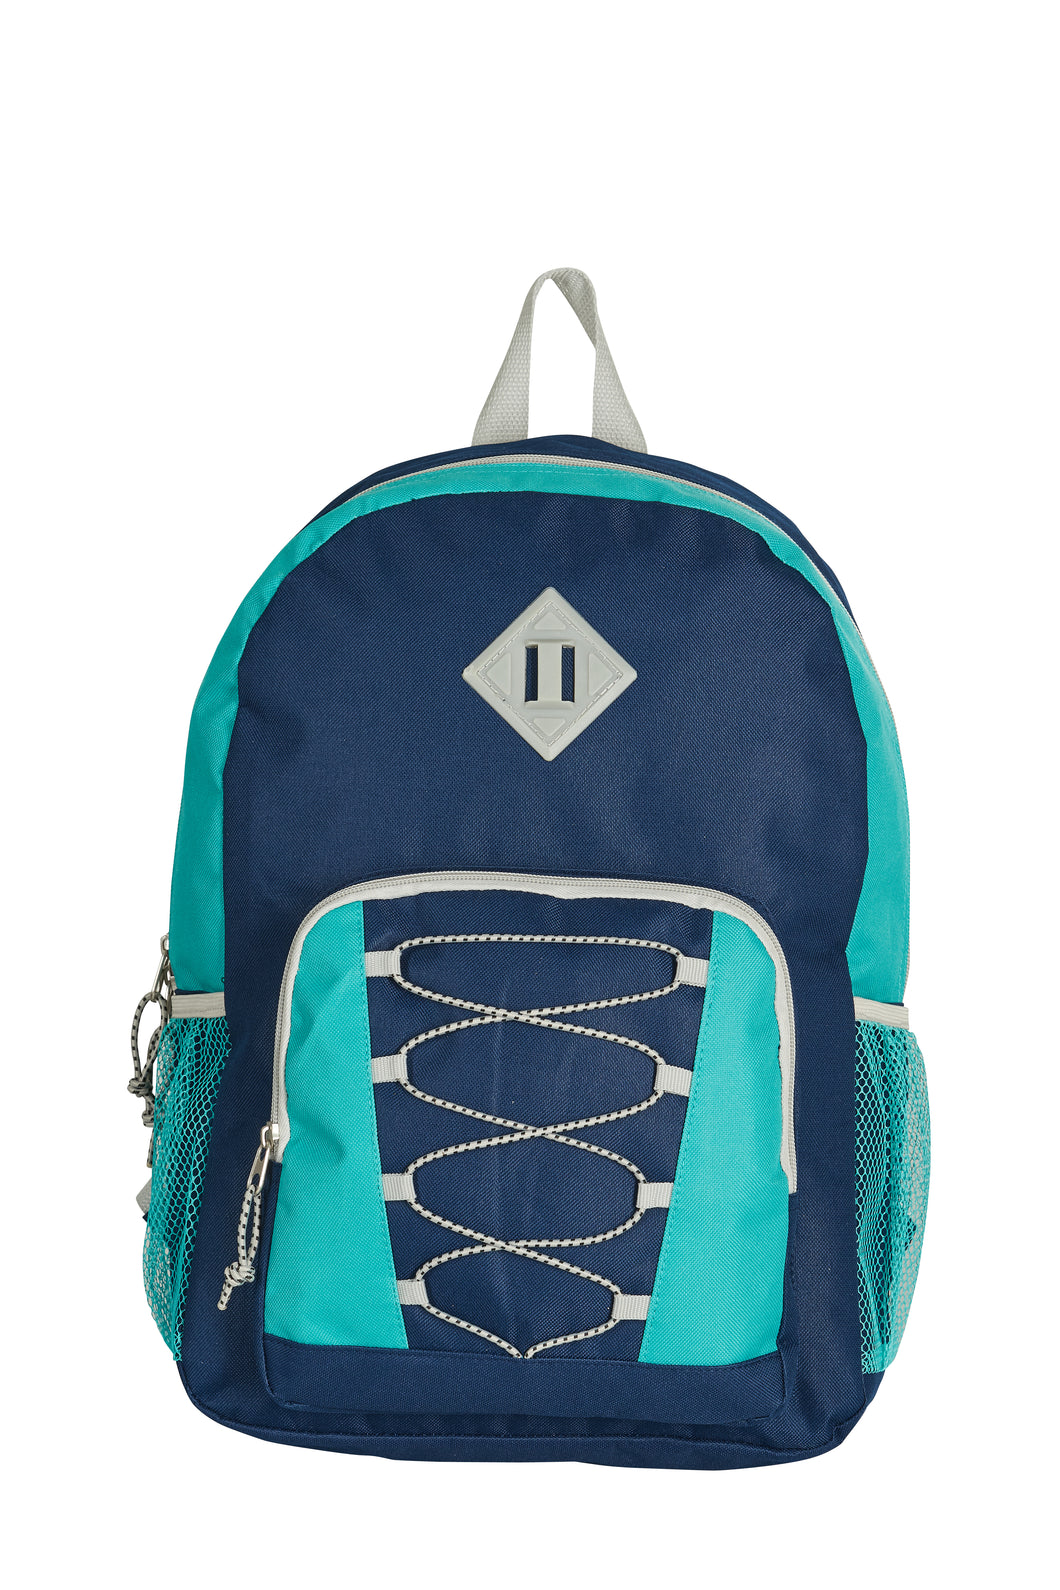 School PS250 Backpack ($6.50/Ea-24/Case)